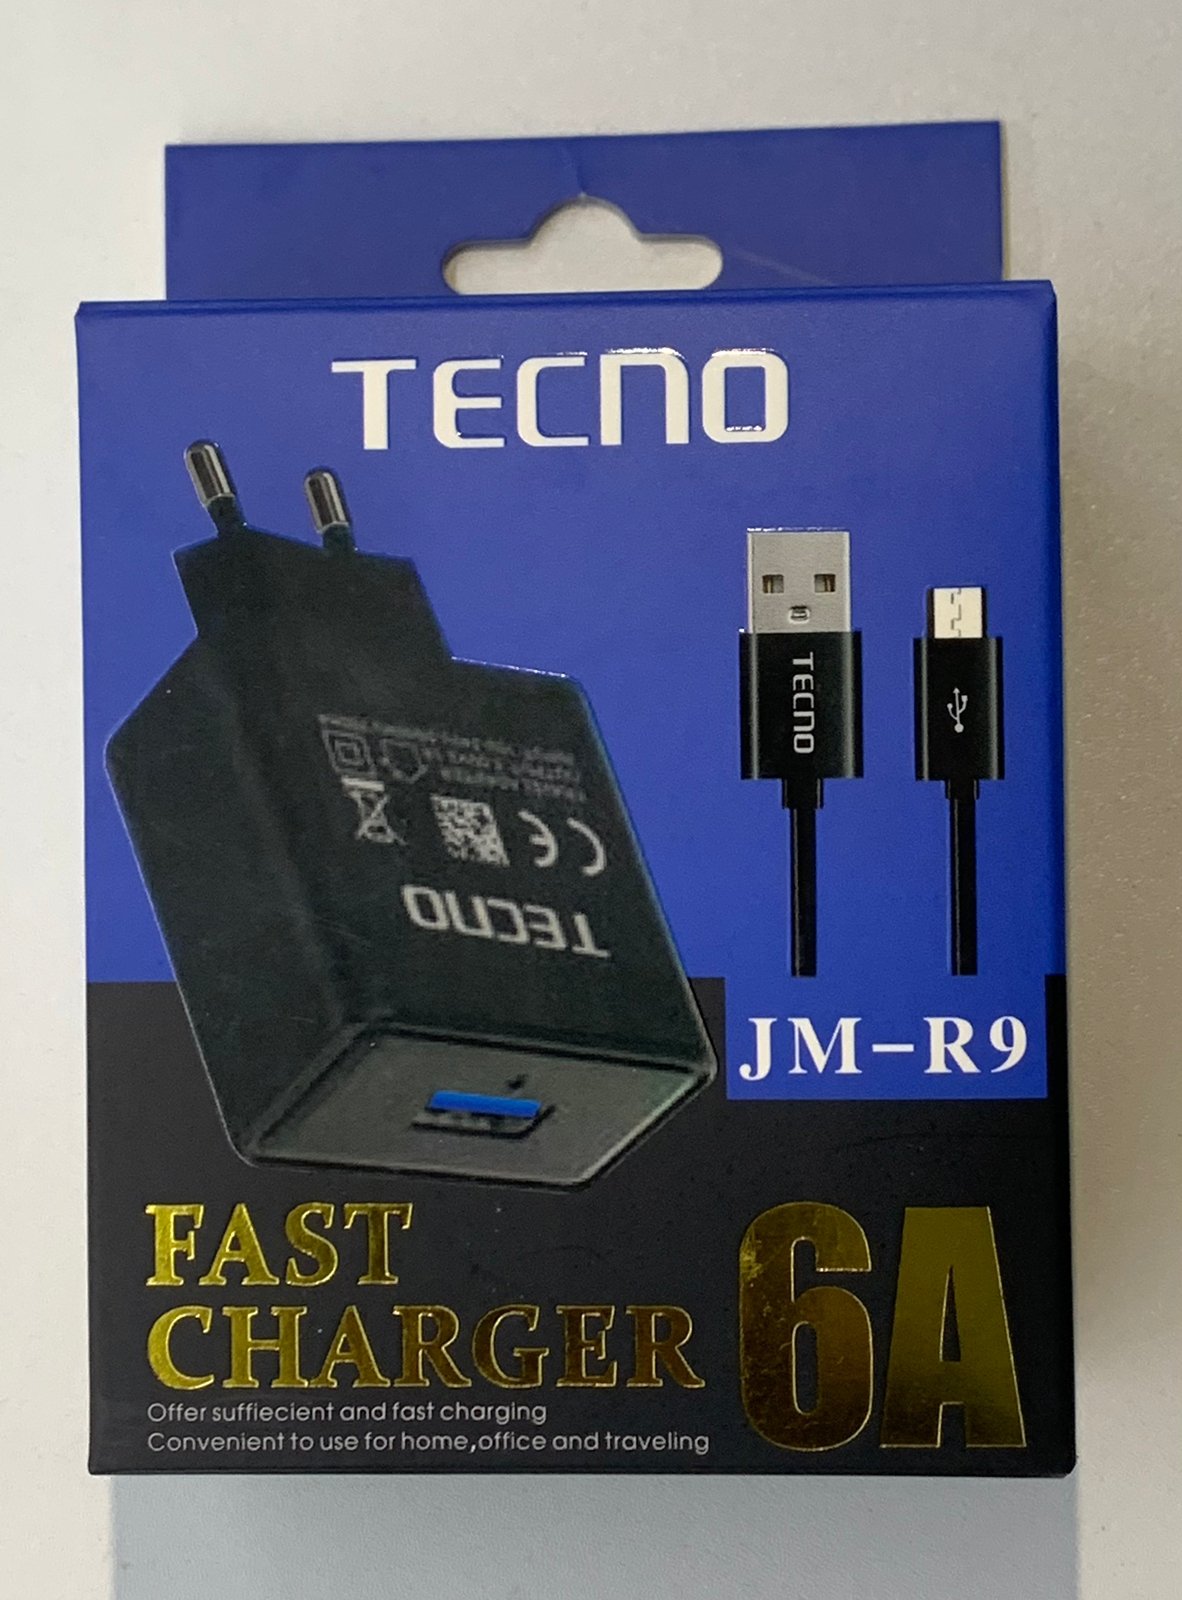 TECNO JM-R9 FAST CHARGER 6A